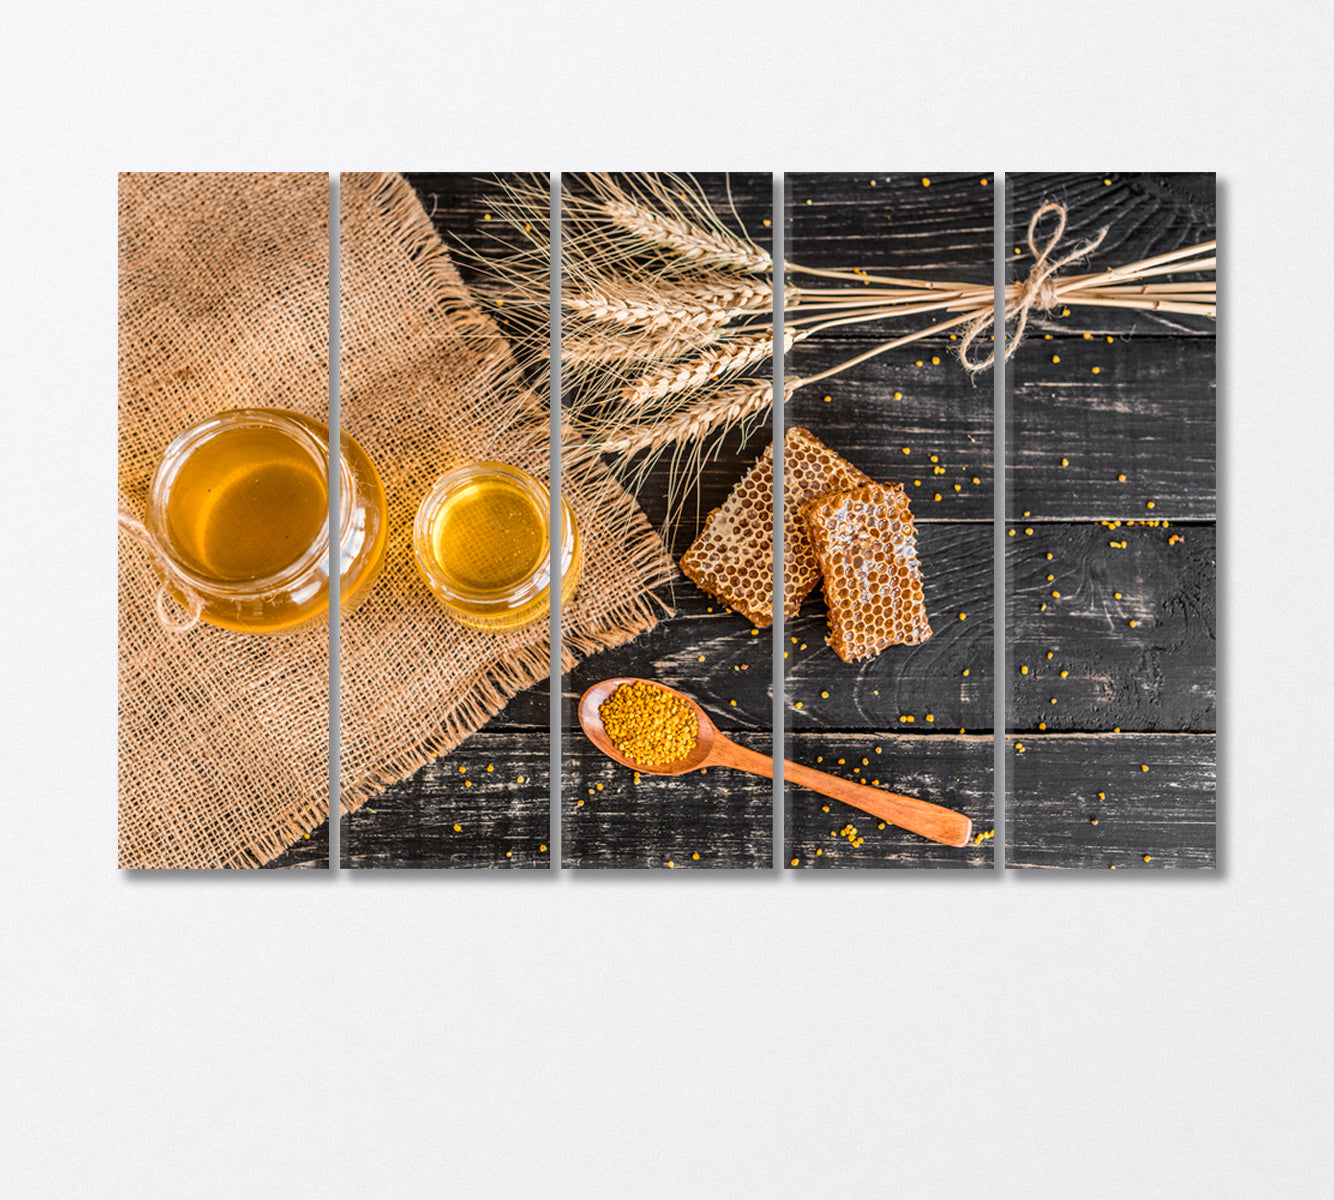 Honey with Honeycombs Canvas Print-Canvas Print-CetArt-5 Panels-36x24 inches-CetArt